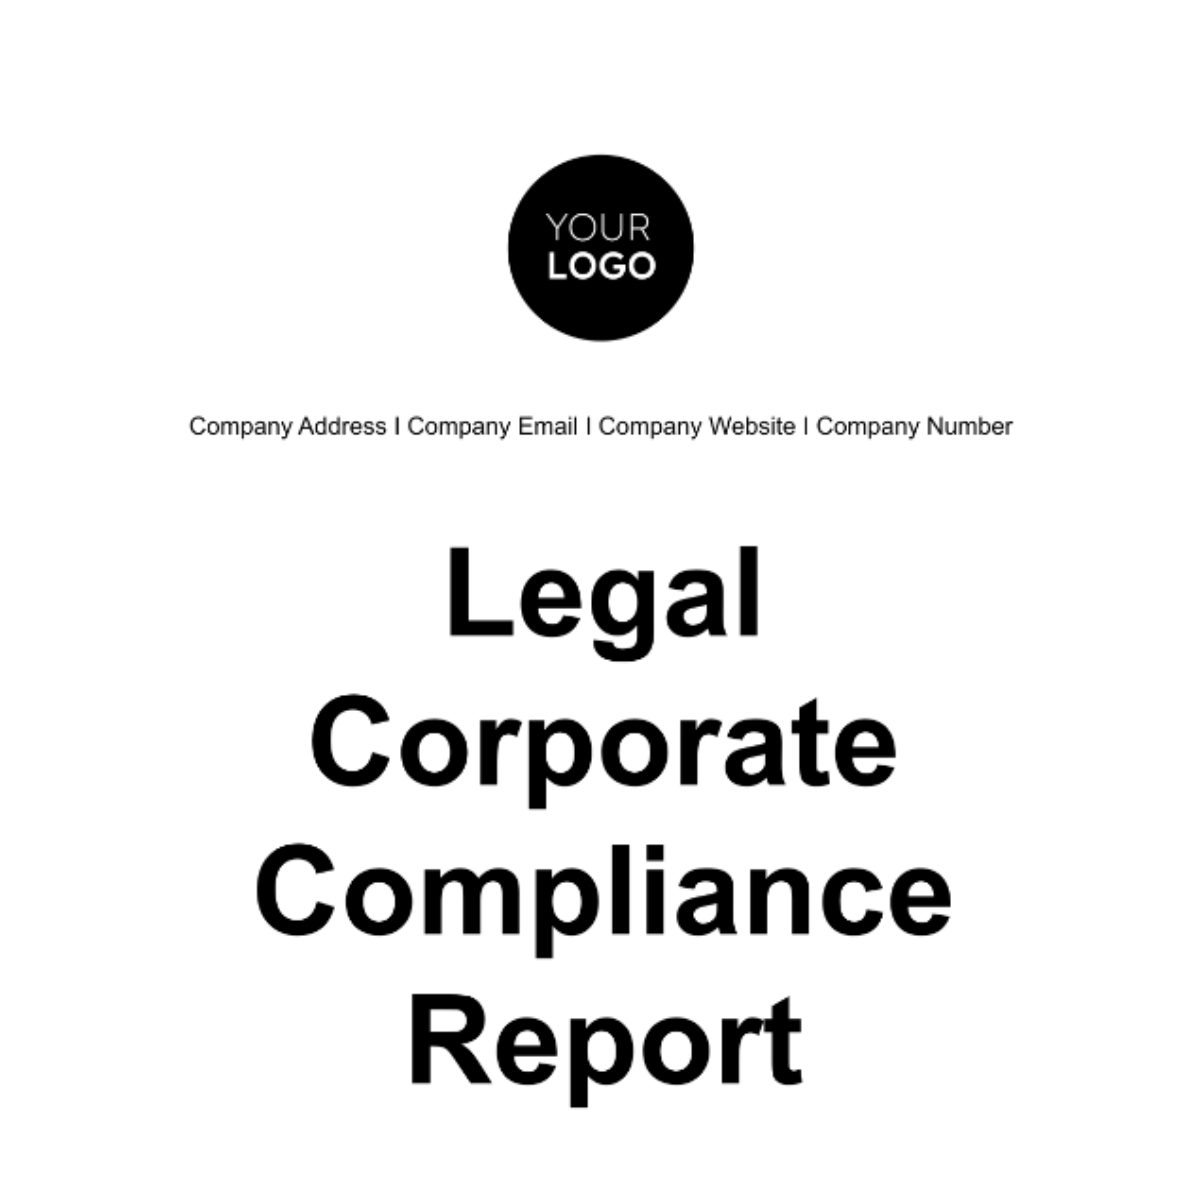 Legal Corporate Compliance Report Template